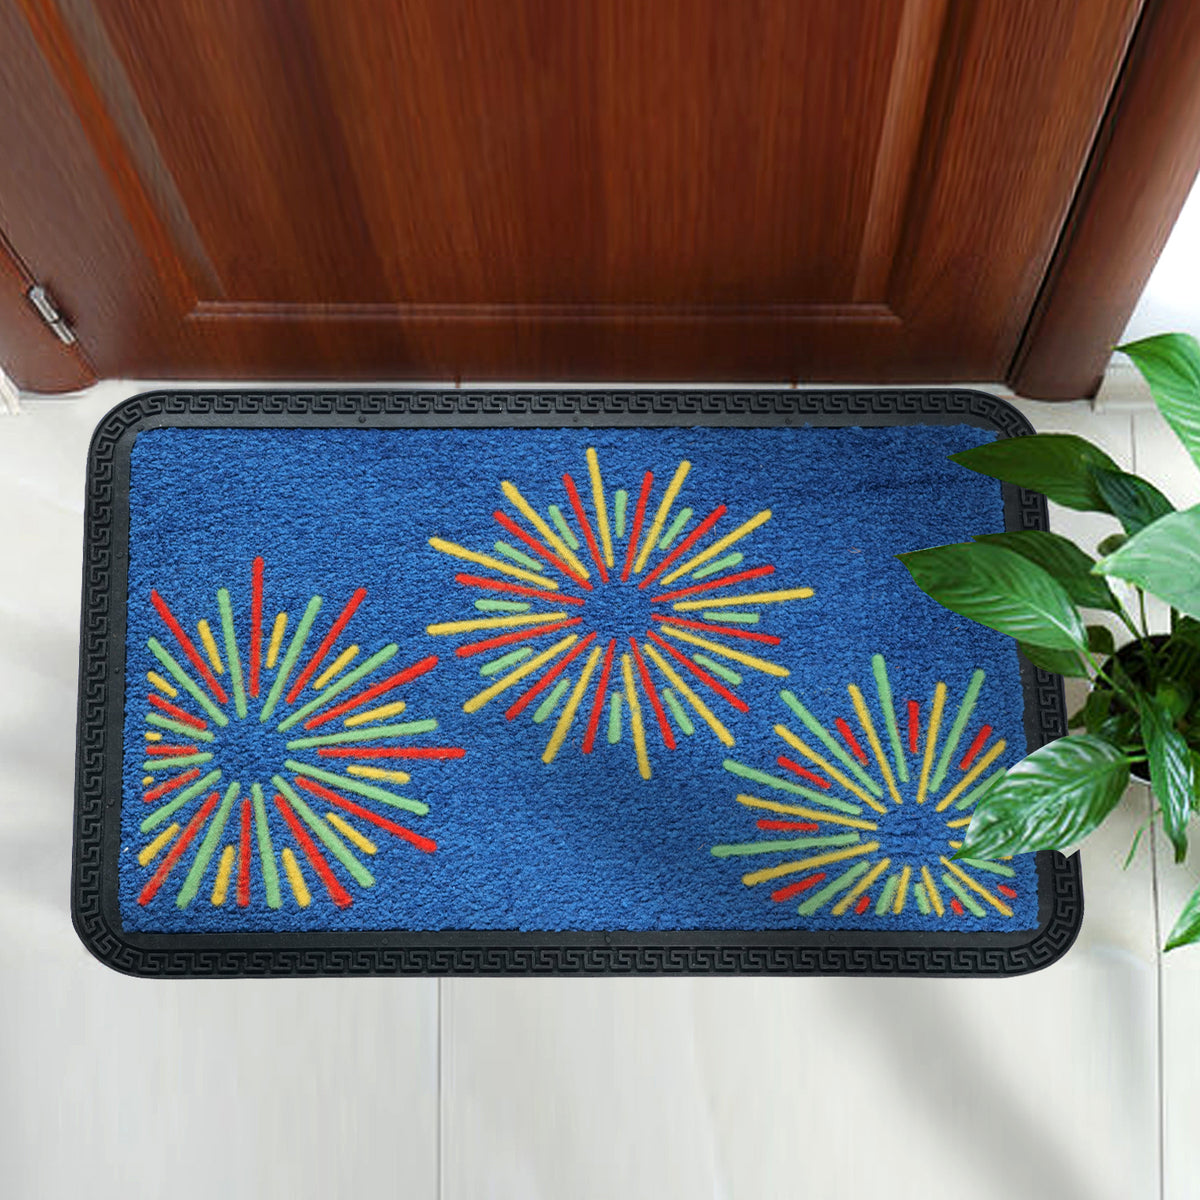 Diwali Fireworks QuickDry Colourful Soft All-Purpose Mat Kitchen Bathroom Door Entrance 40x60x8mm (Blue)